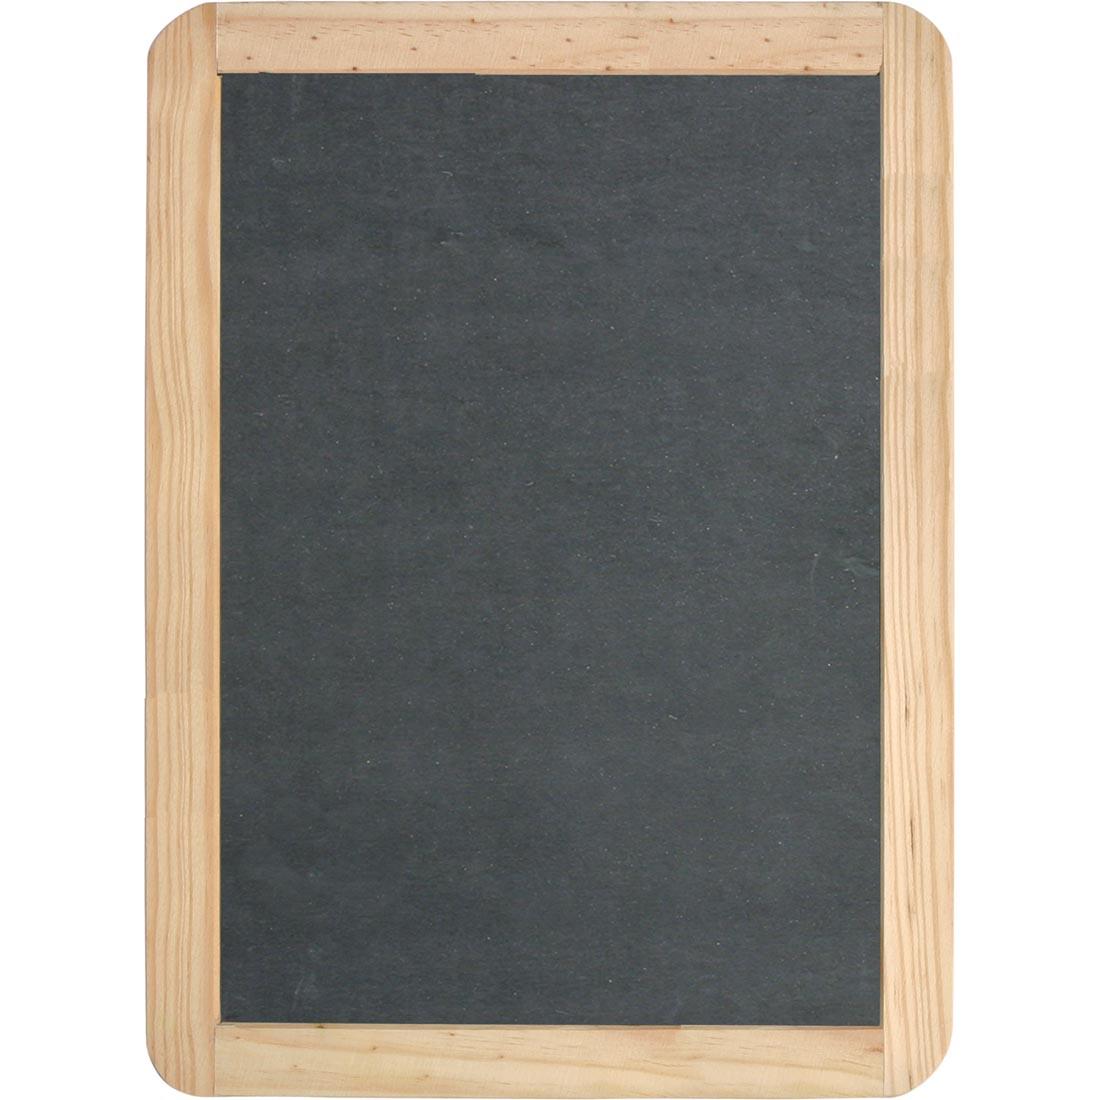 Slate Chalkboard 7x10" 